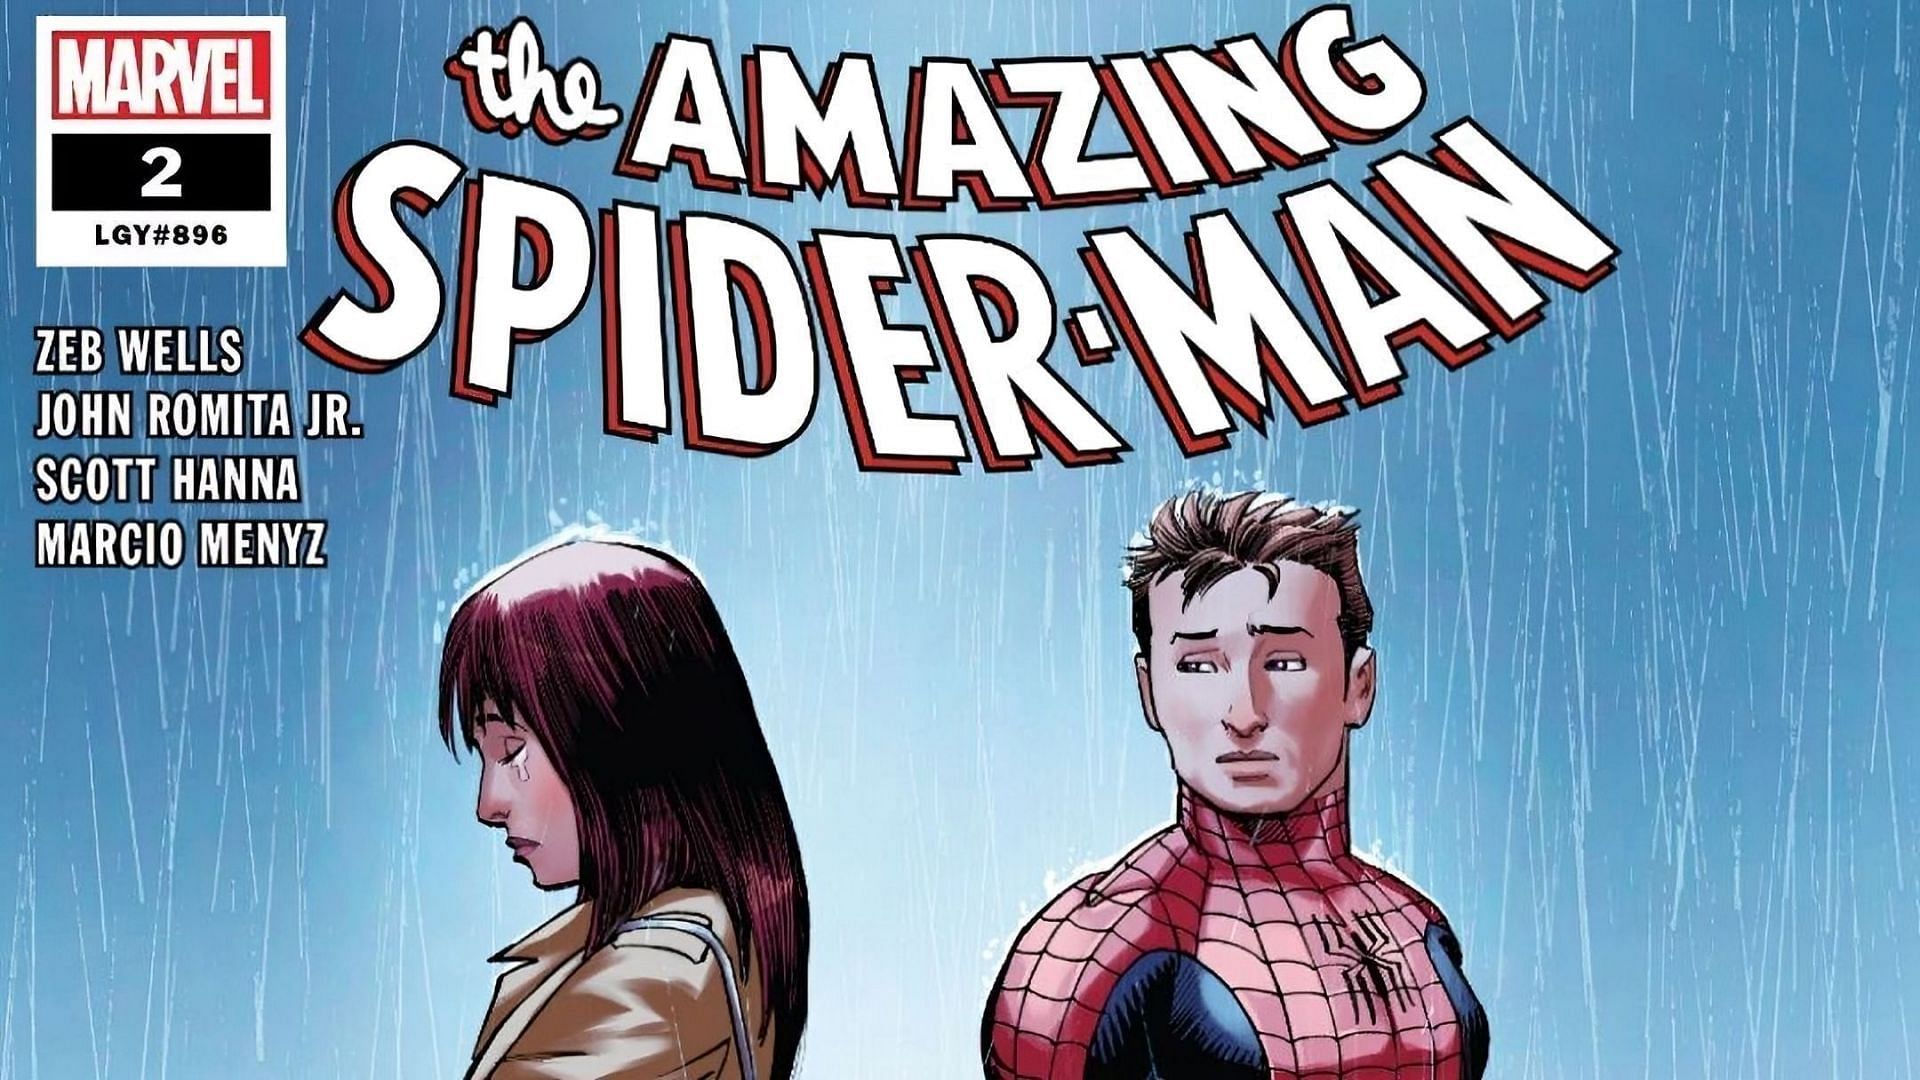 The Amazing Spider-Man #2 cover (Image via Marvel Comics)